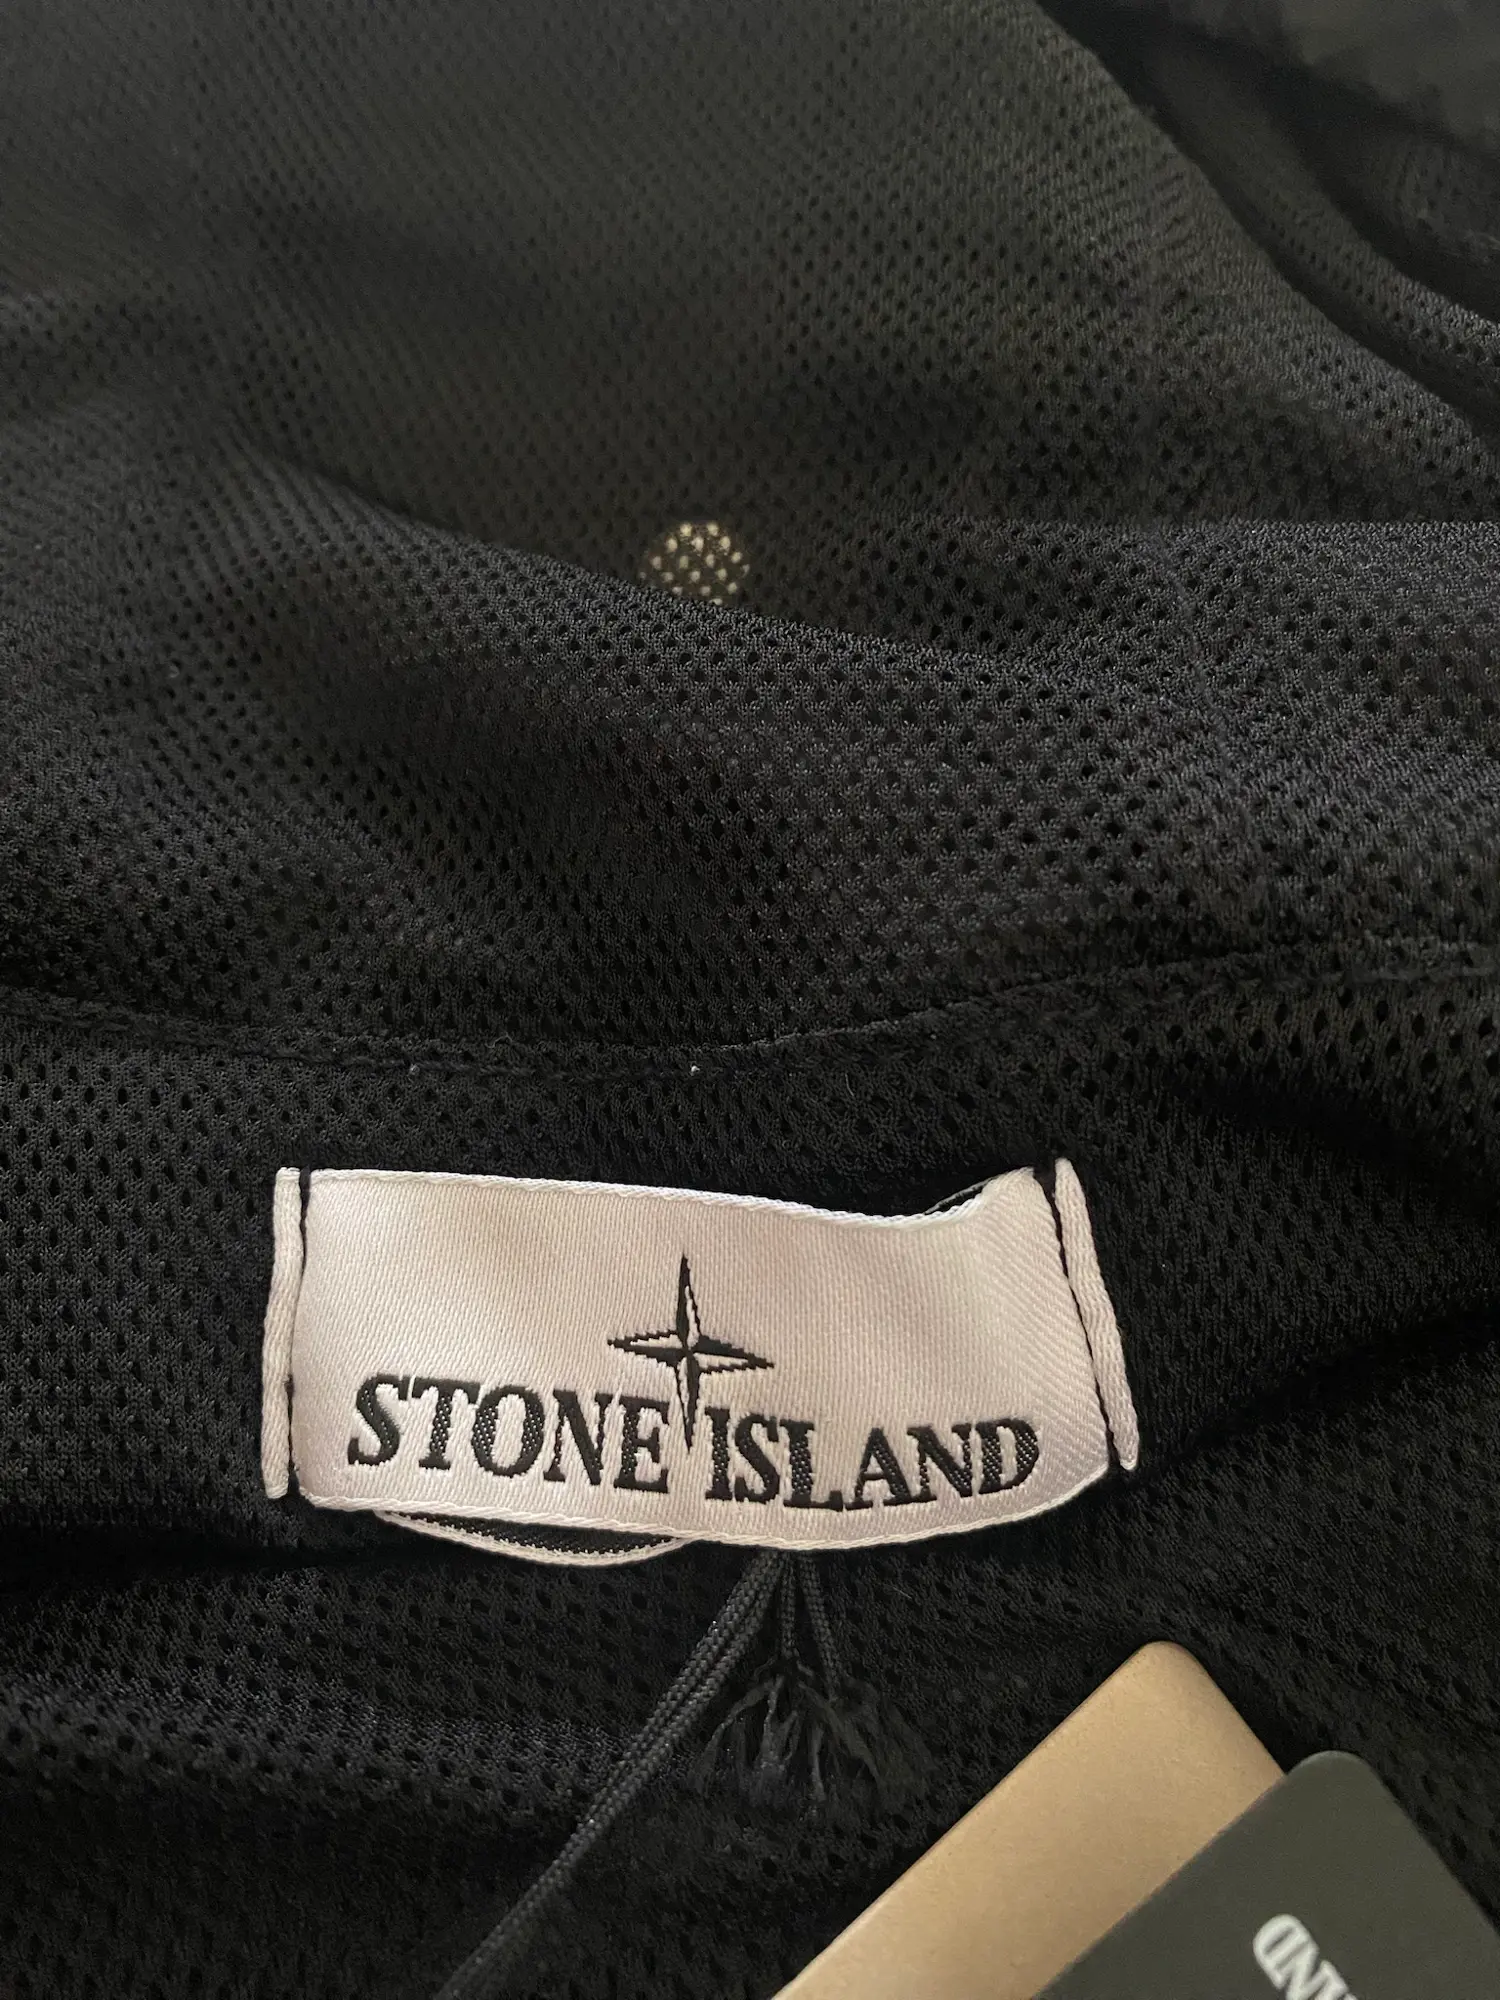 Stone Island jakke